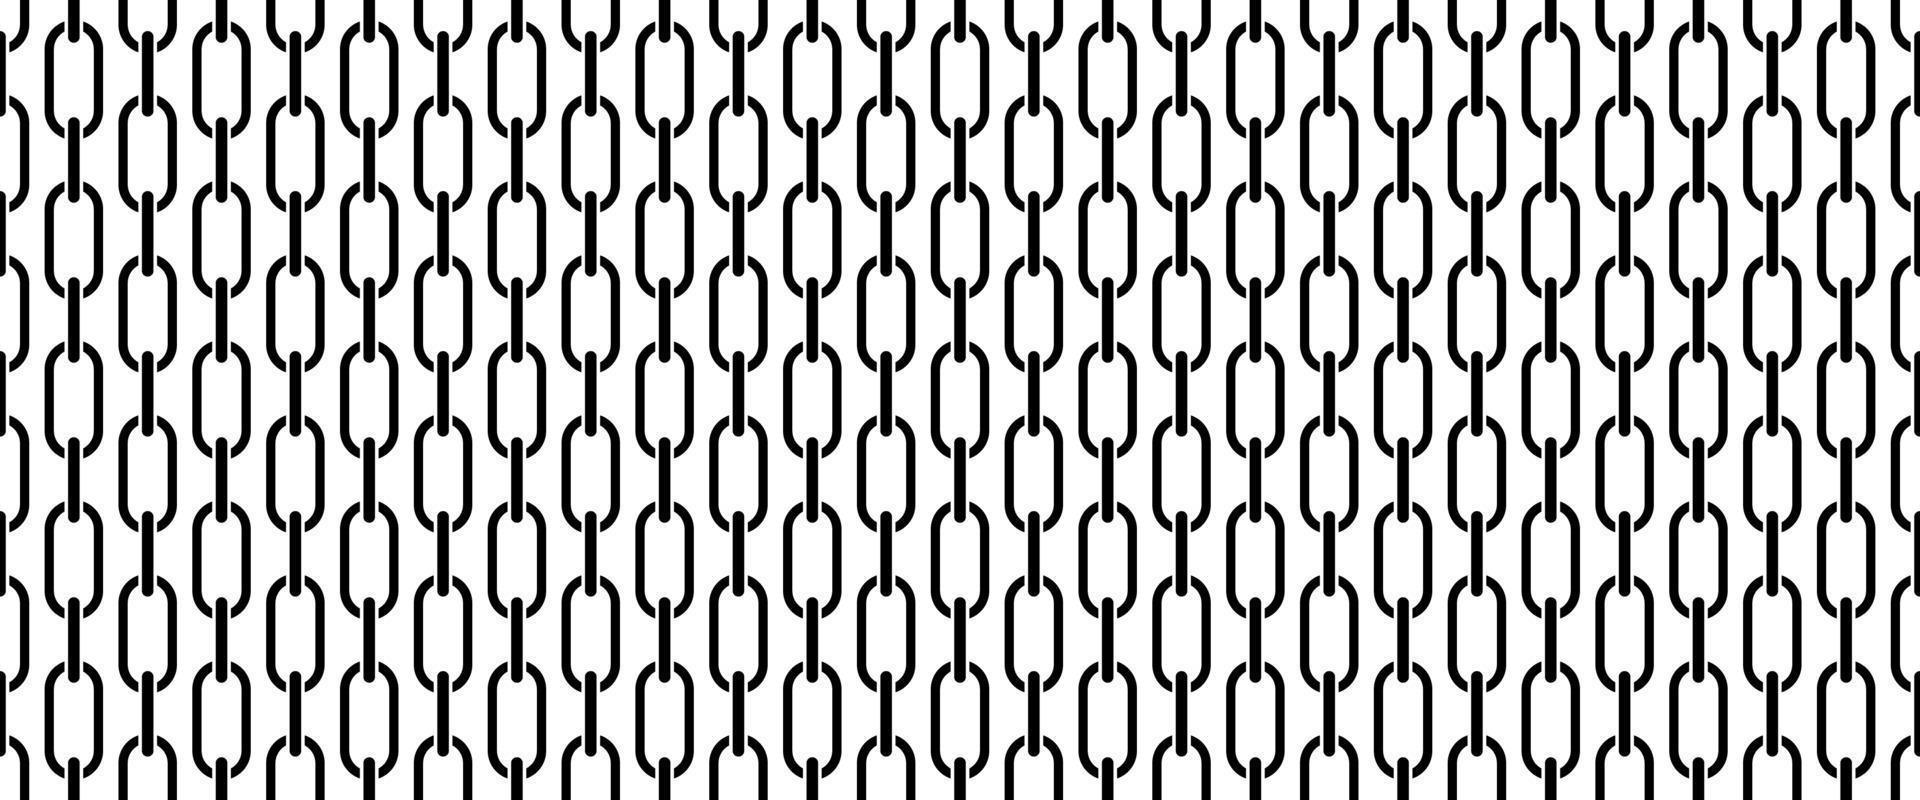 black white chain link seamless pattern.chainlink seamless pattern vector